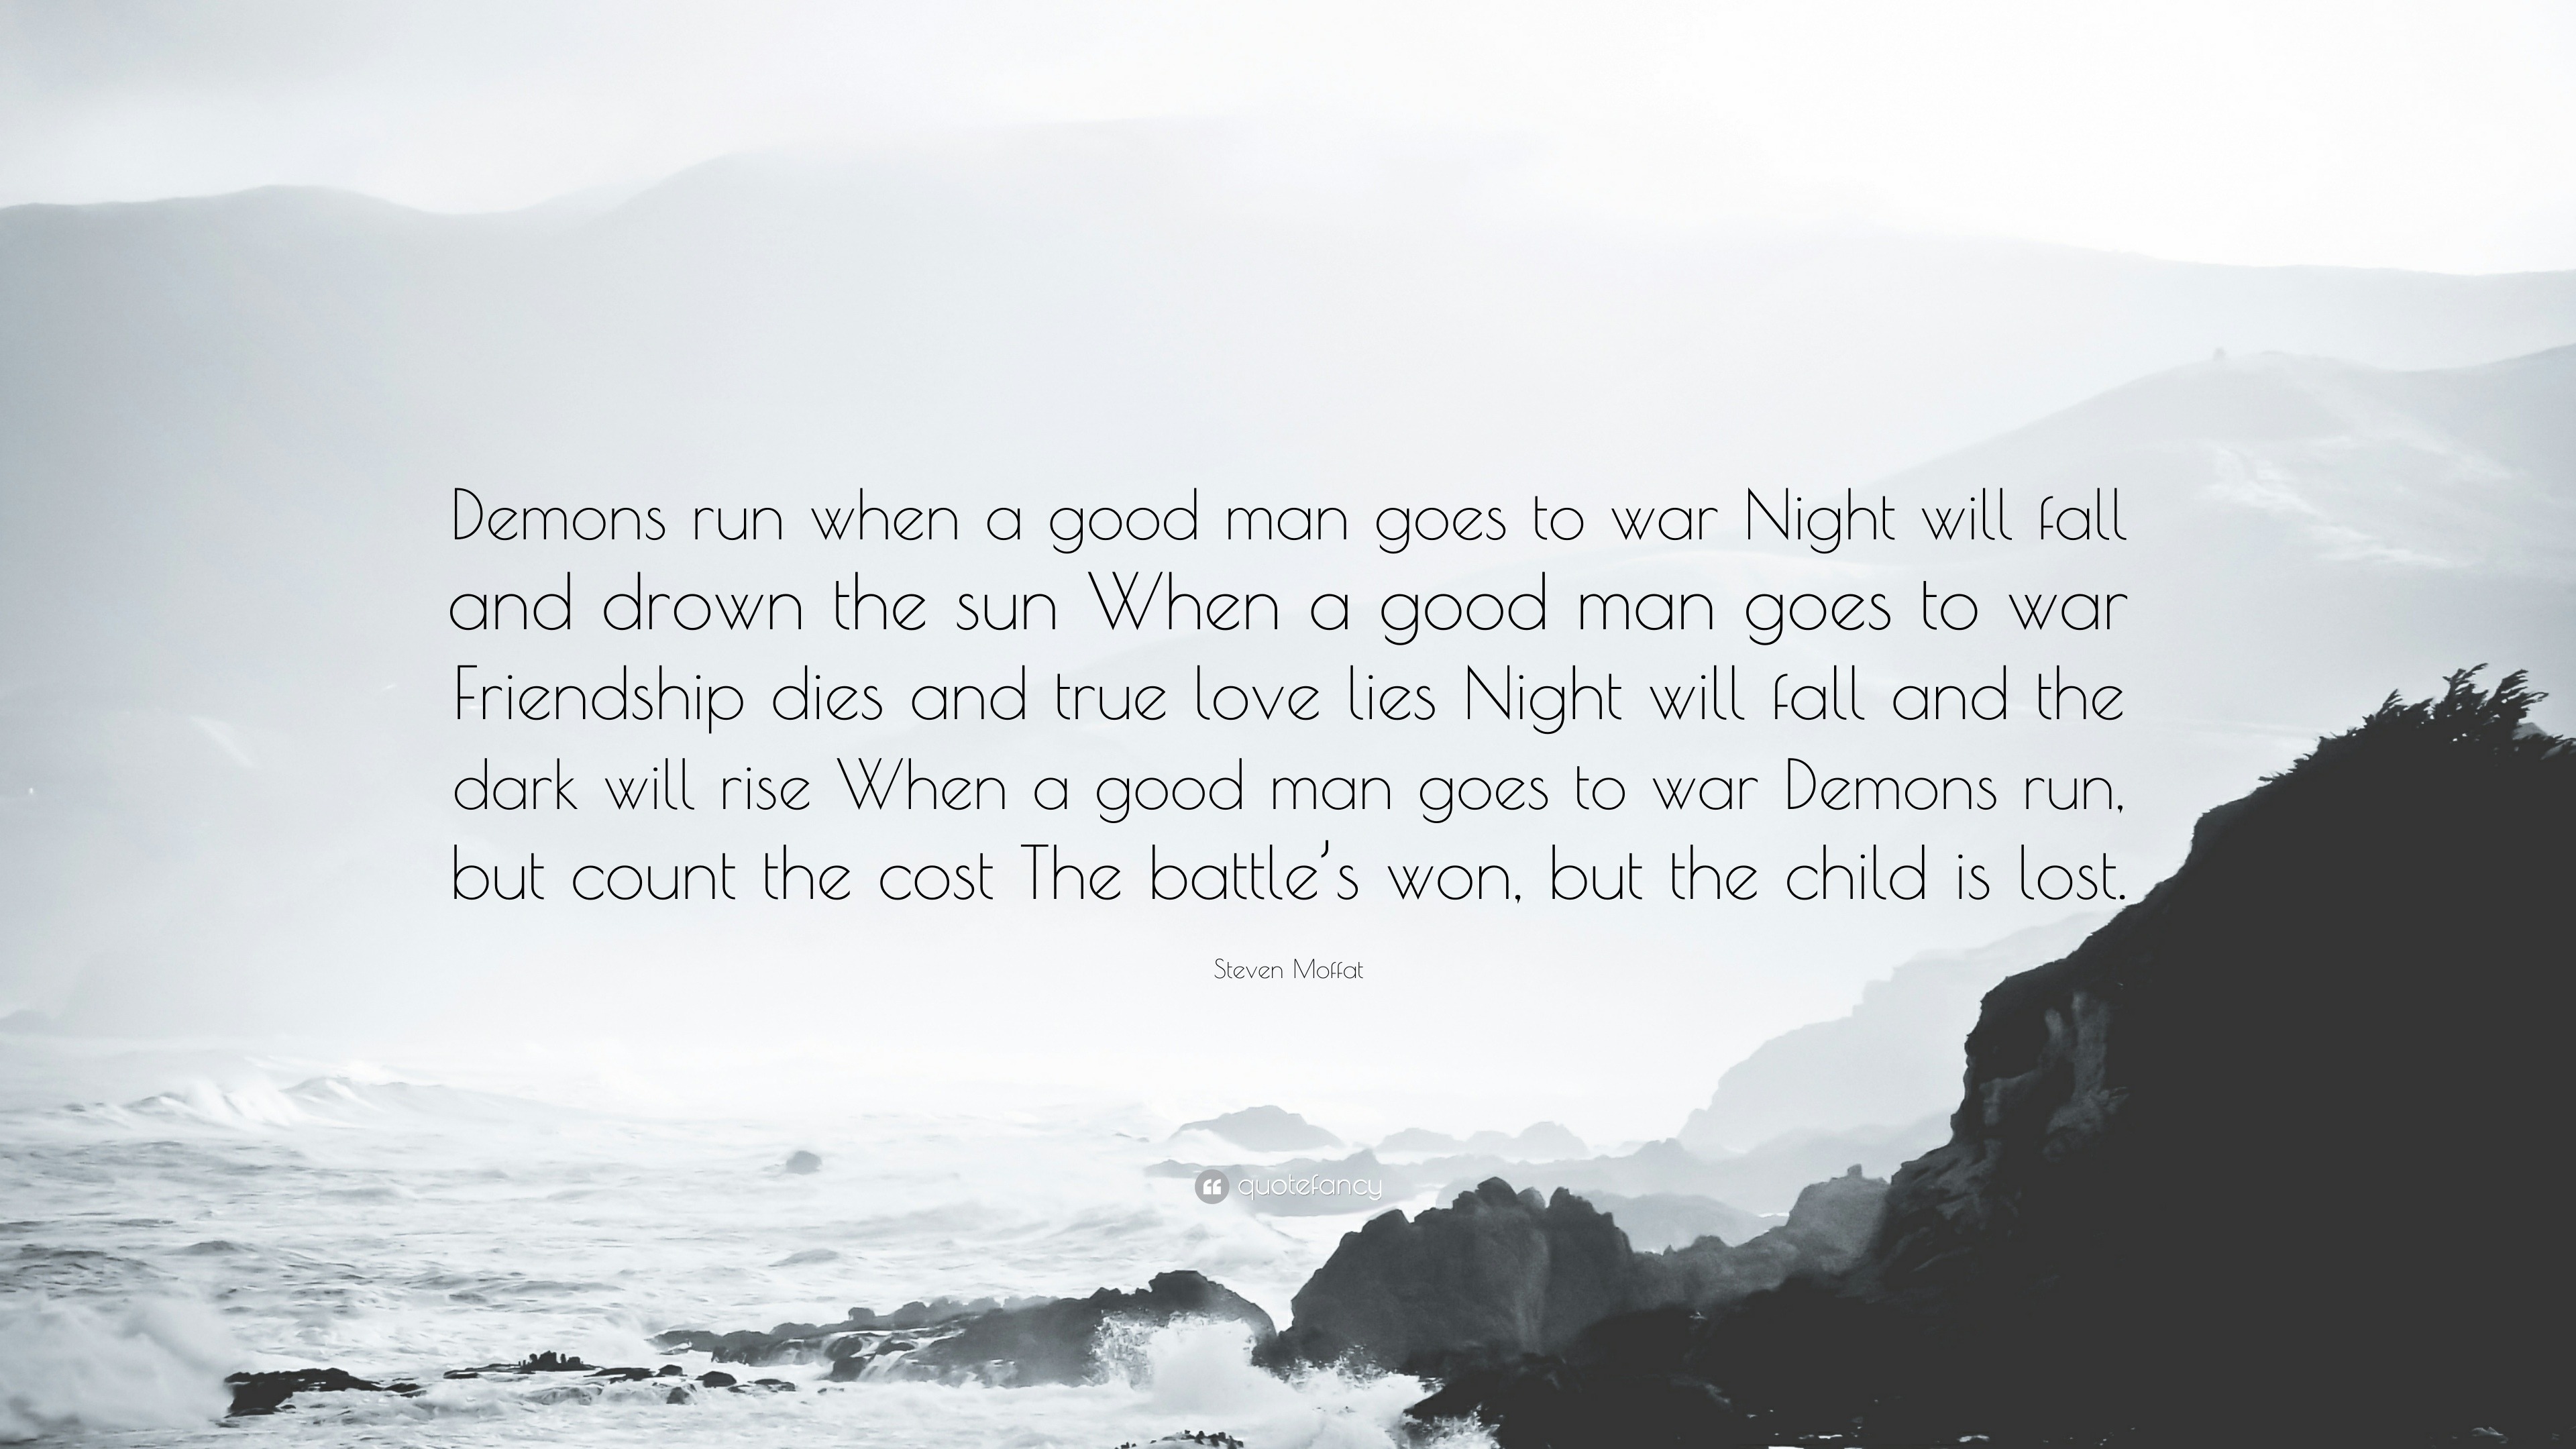 Steven Moffat Quote “Demons run when a good man goes to war Night will